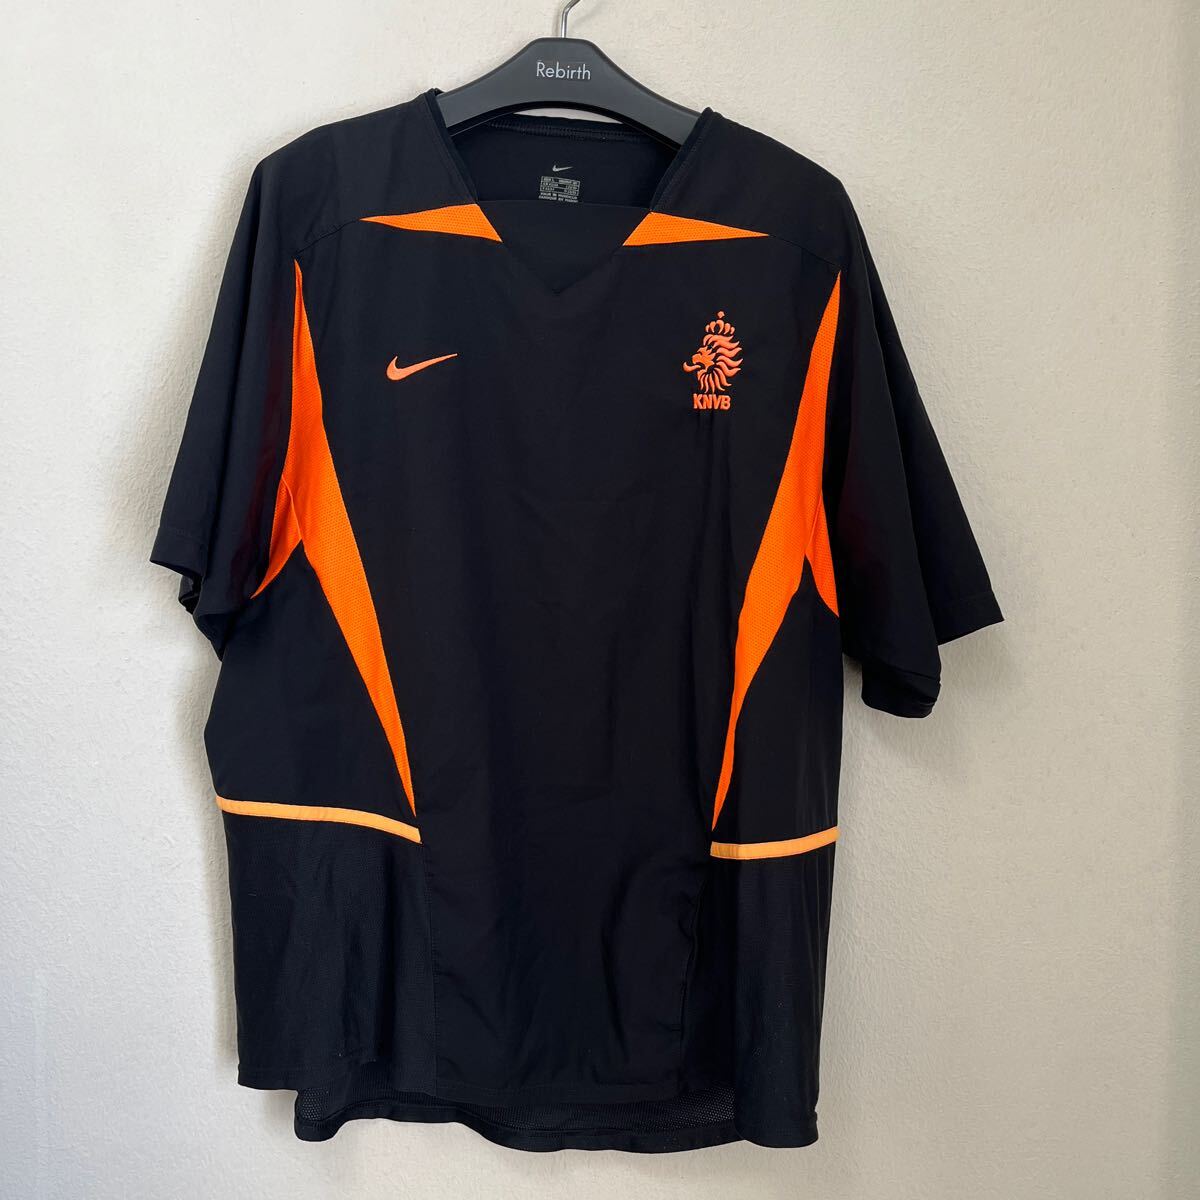 Nike Soccer Uniform с коротким рукавом черная KNVB Голландская сборная l